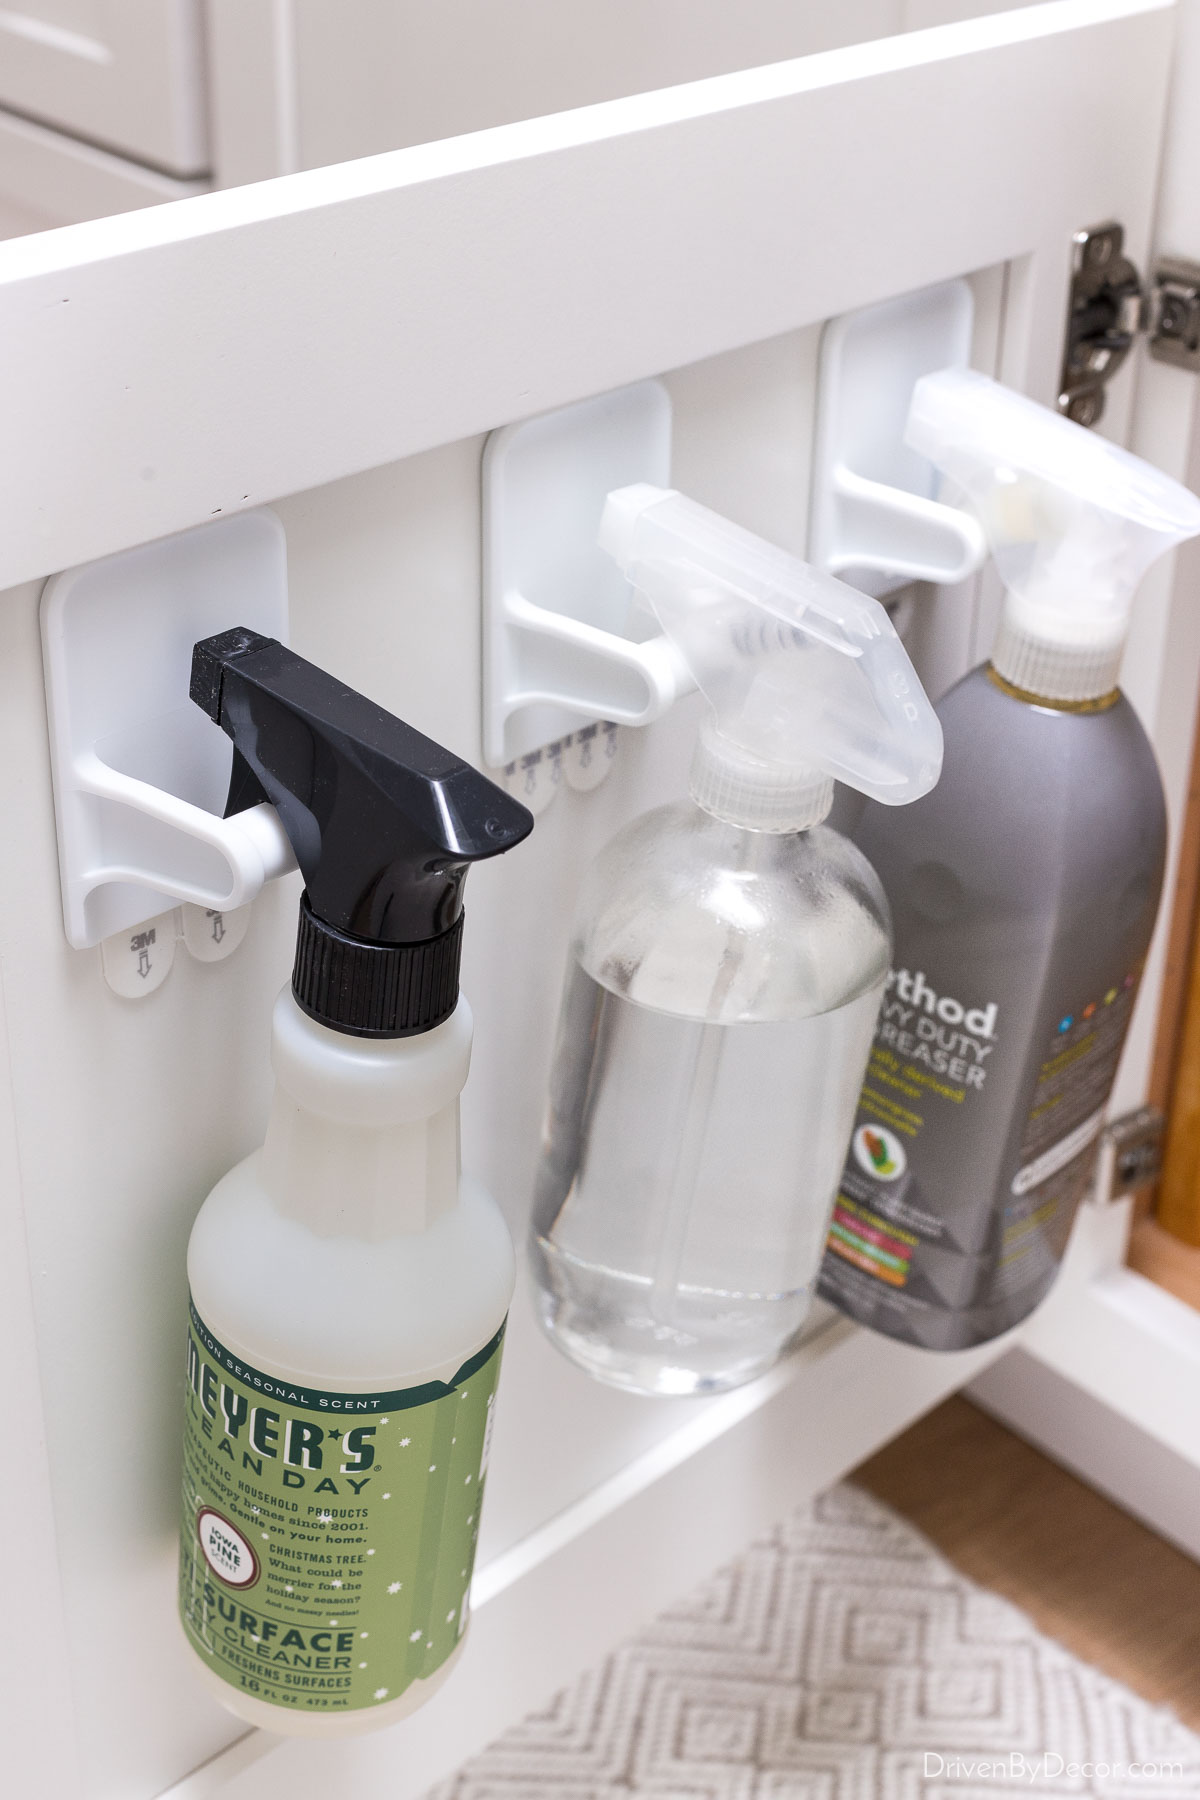 https://www.drivenbydecor.com/wp-content/uploads/2022/02/kitchen-cabinet-organization-spray-bottle-holder-2.jpg